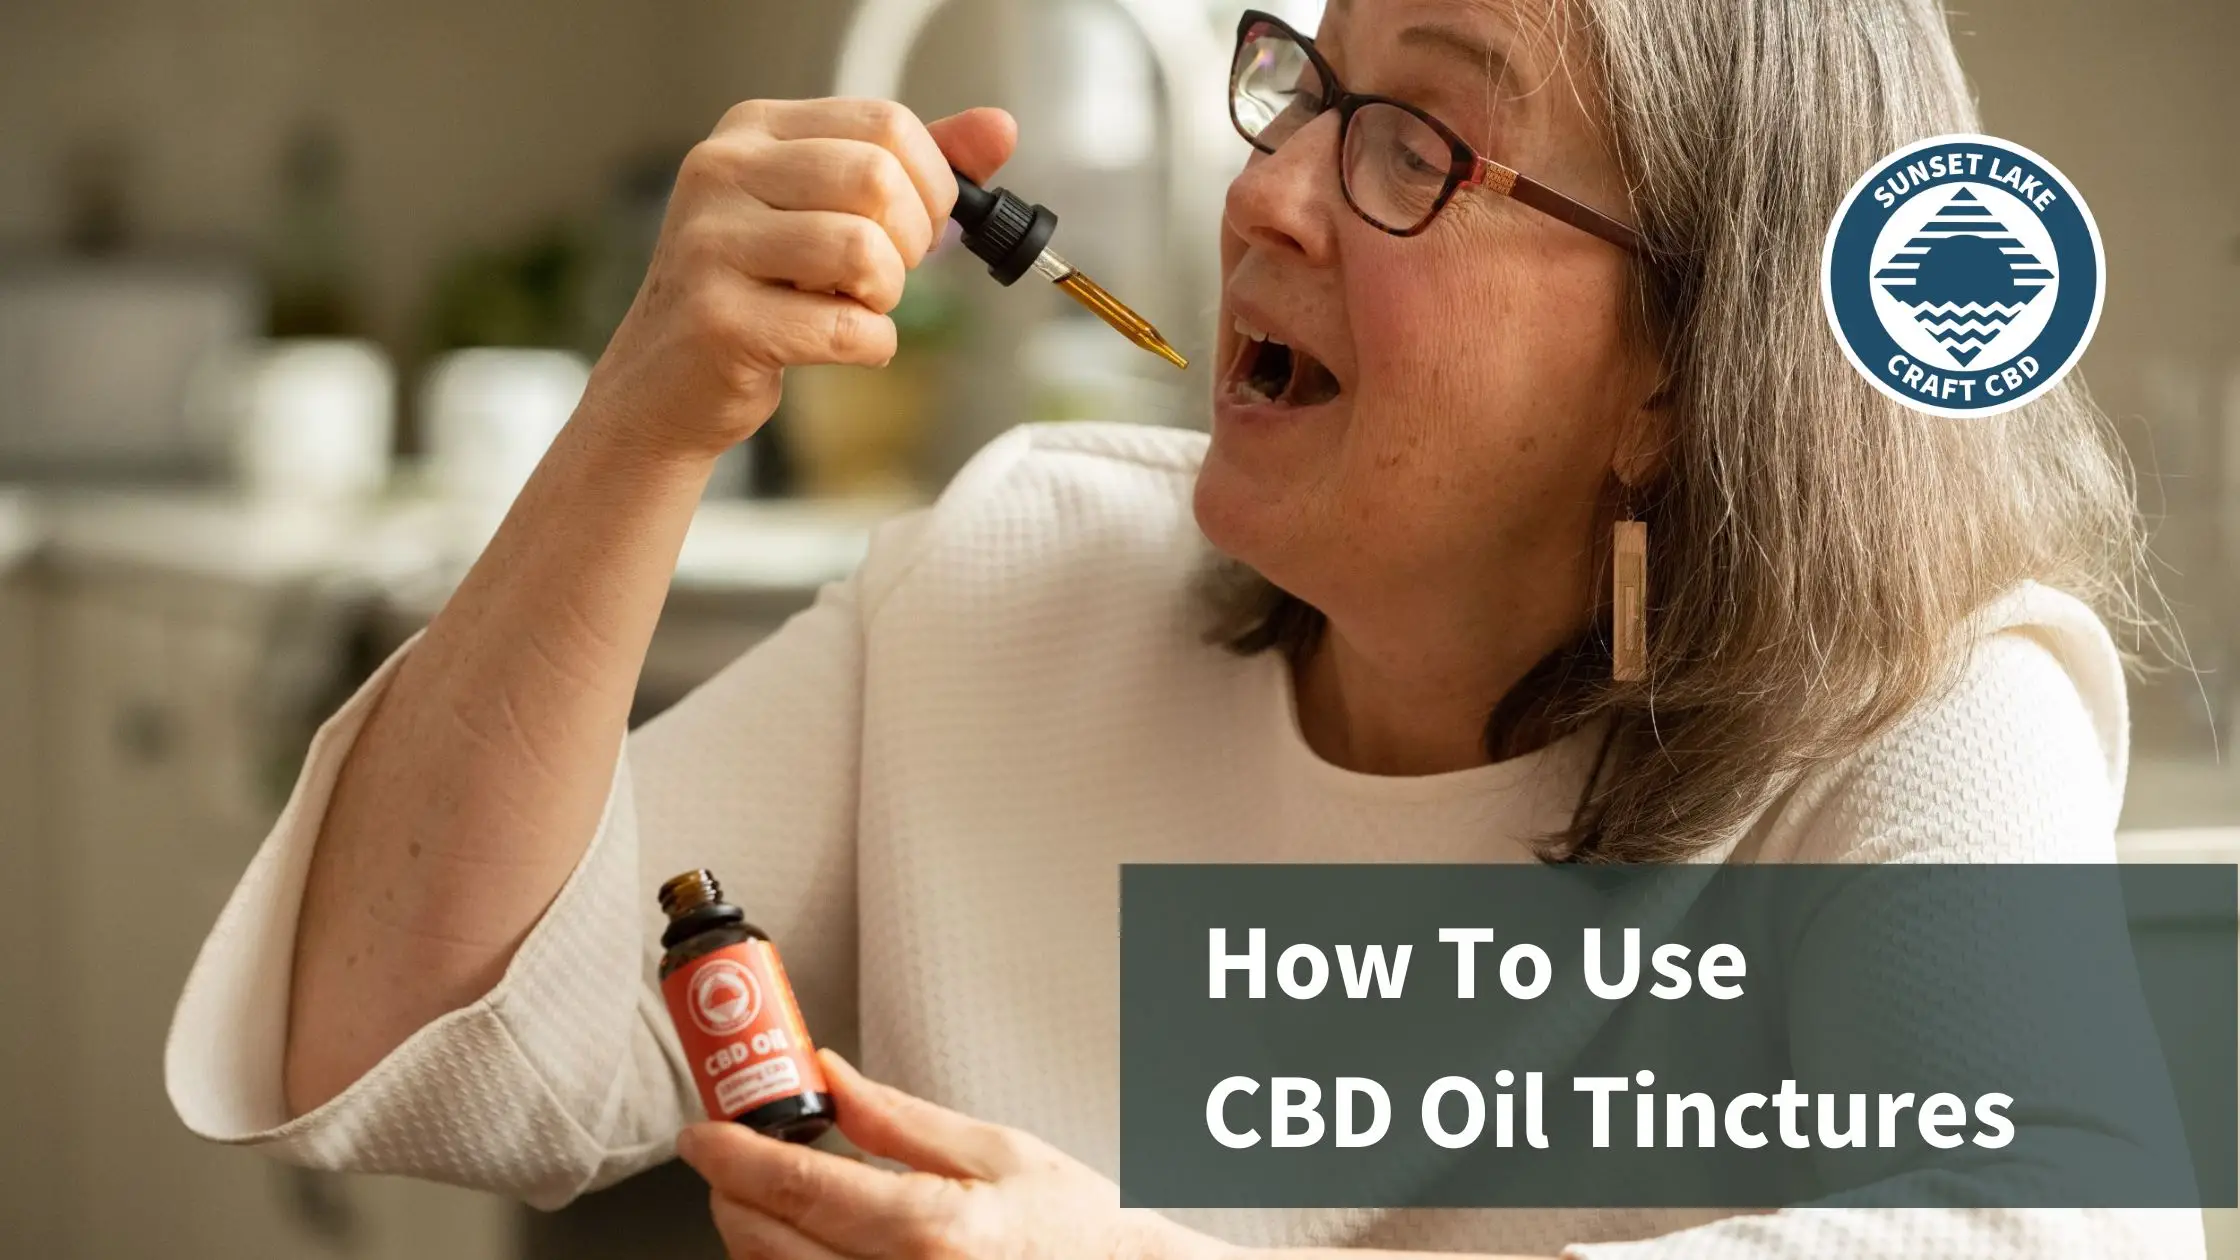 How Do You Use CBD Oil Tinctures?